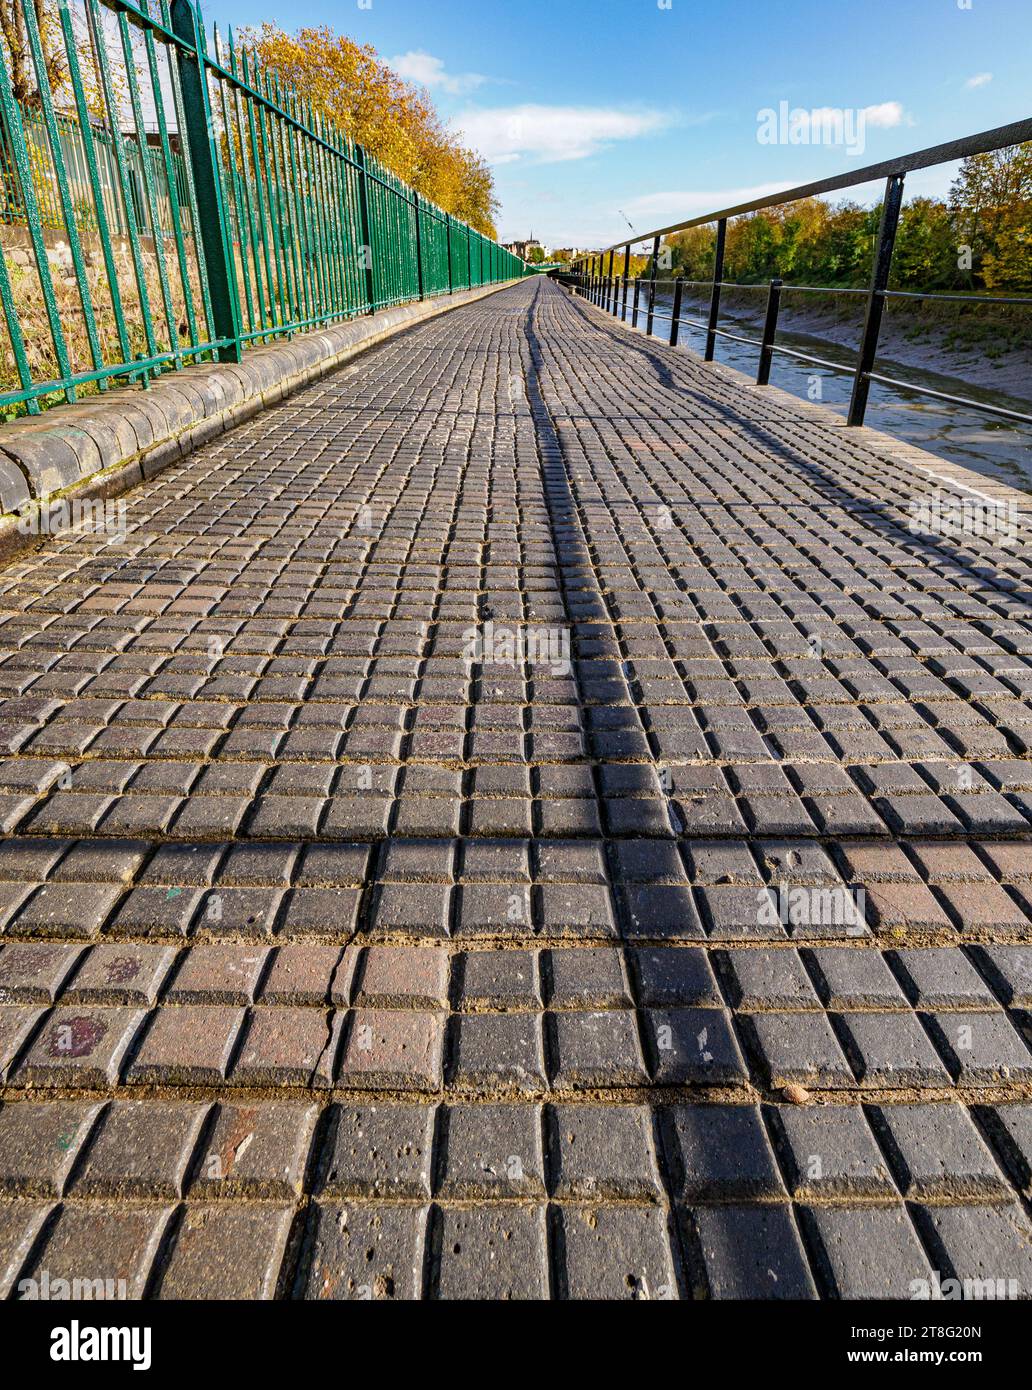 The Chocolate Path am Fluss Avon New Cut Bristol UK – benannt nach dem viktorianischen Bausteinpflaster, der an Schokoladenriegel erinnert Stockfoto